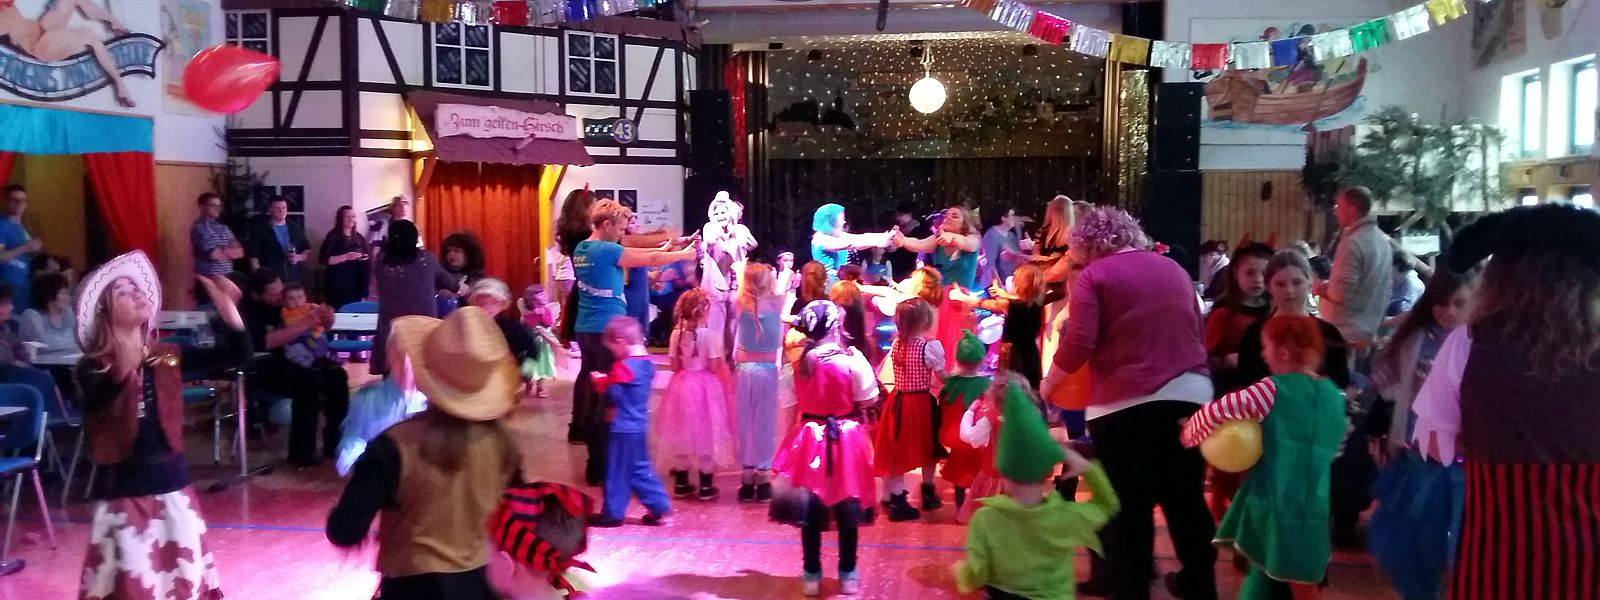 Carnevalsclub Cï¿½mmerswalde